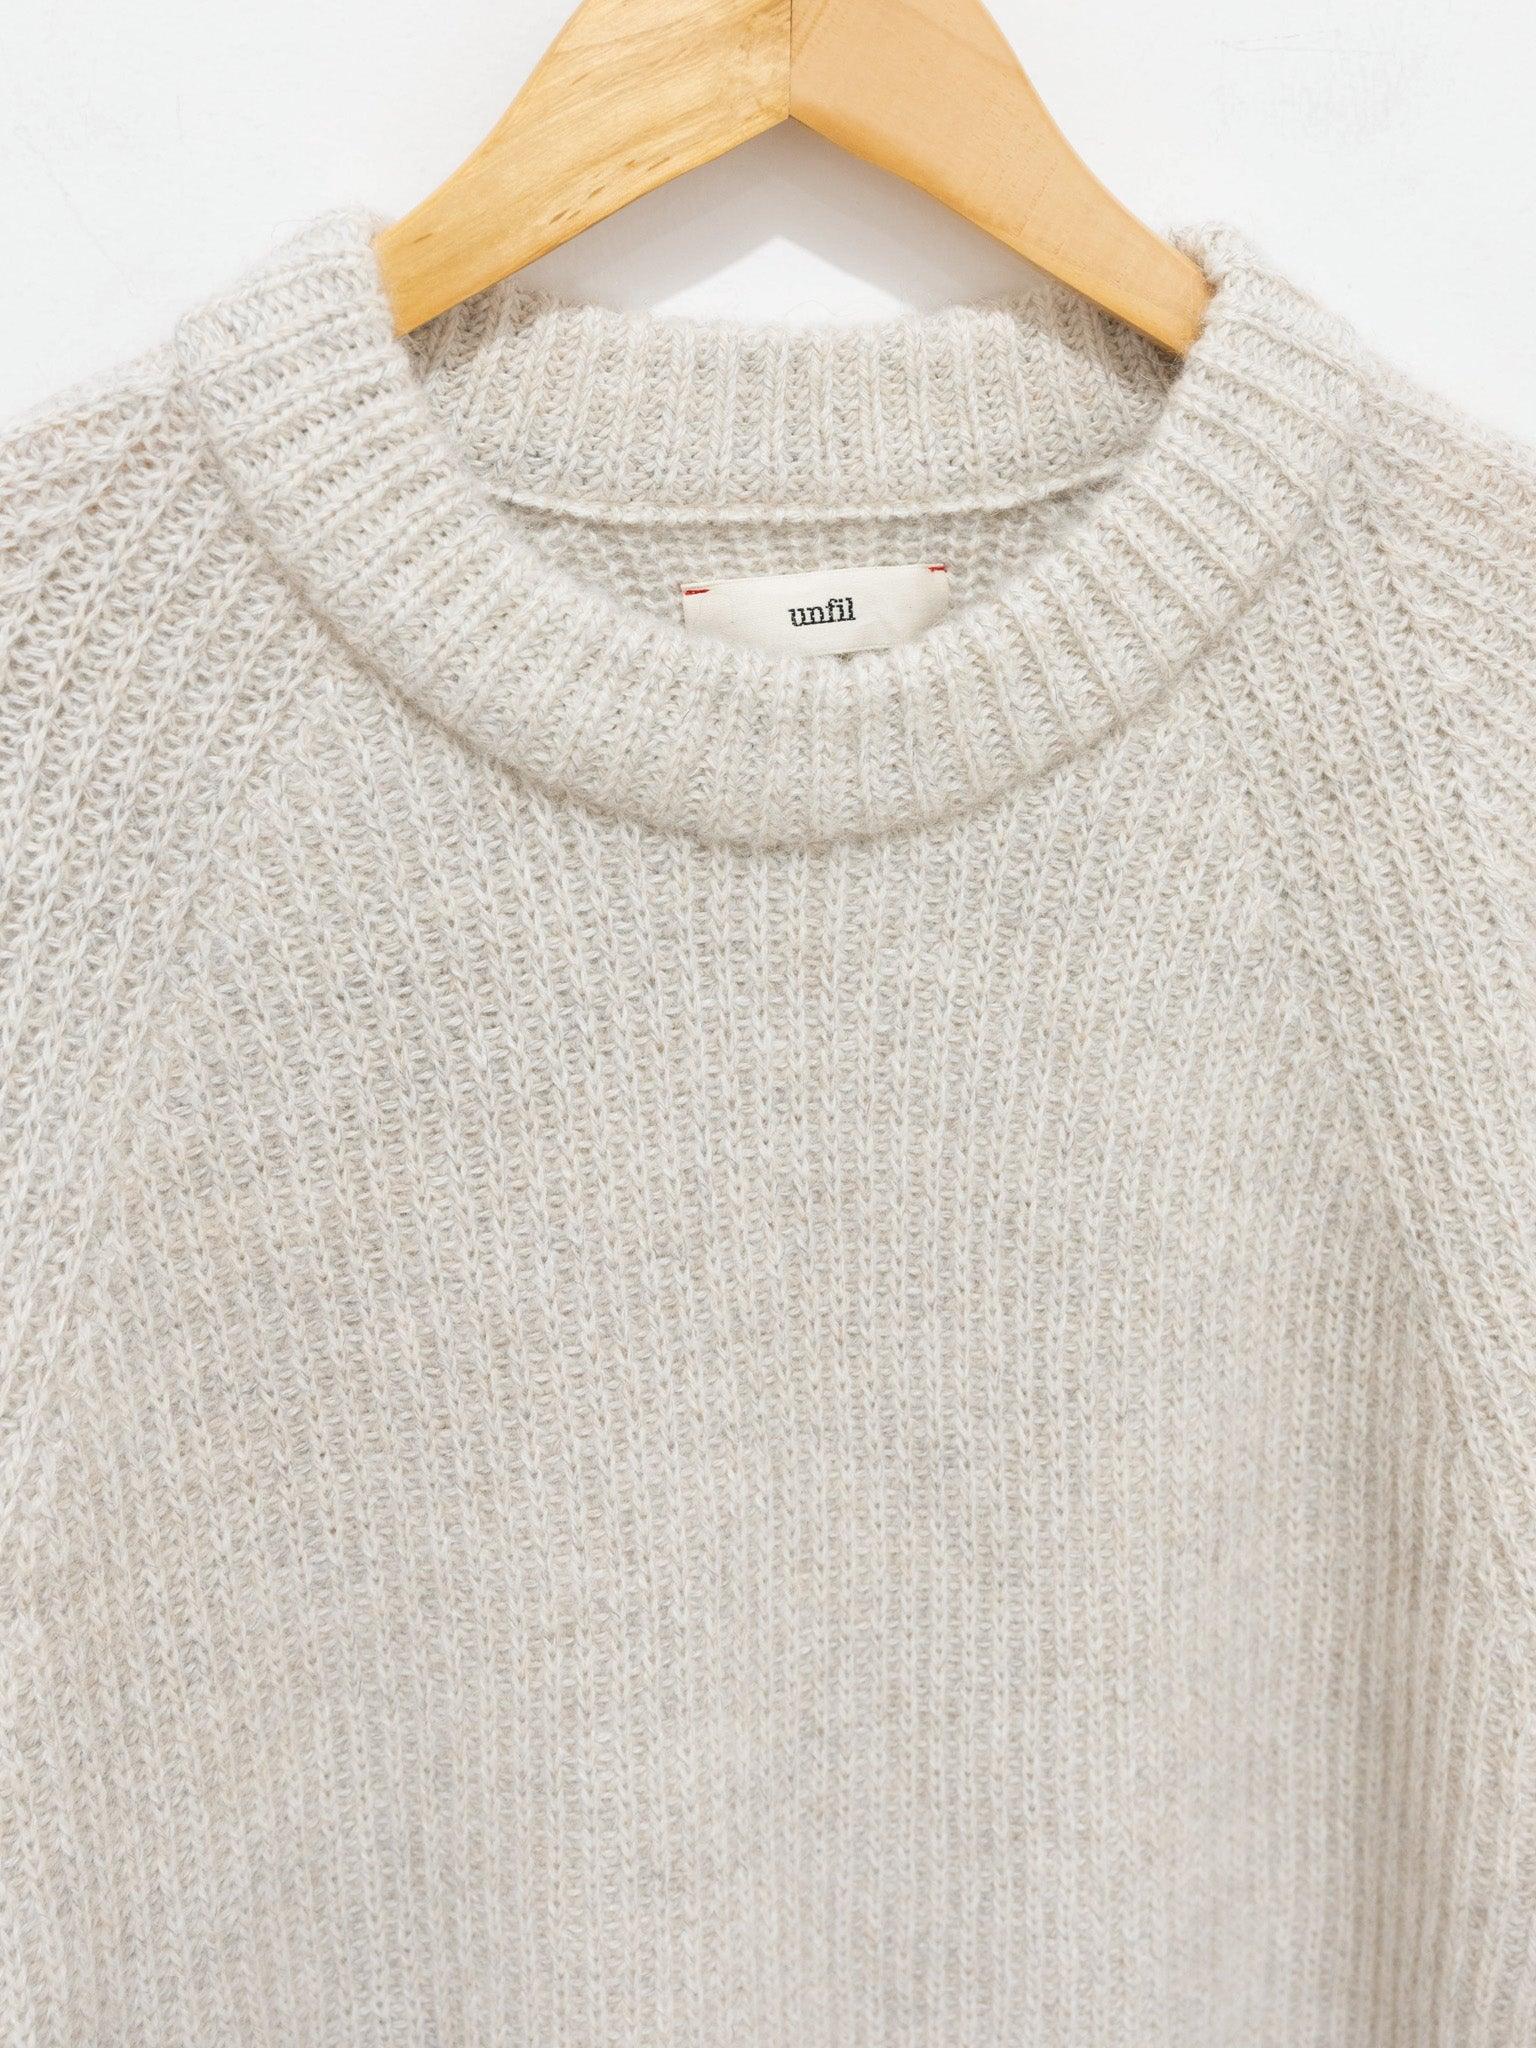 Namu Shop - Unfil Royal Baby Alpaca Ribbed Knit Sweater - Off White Mix